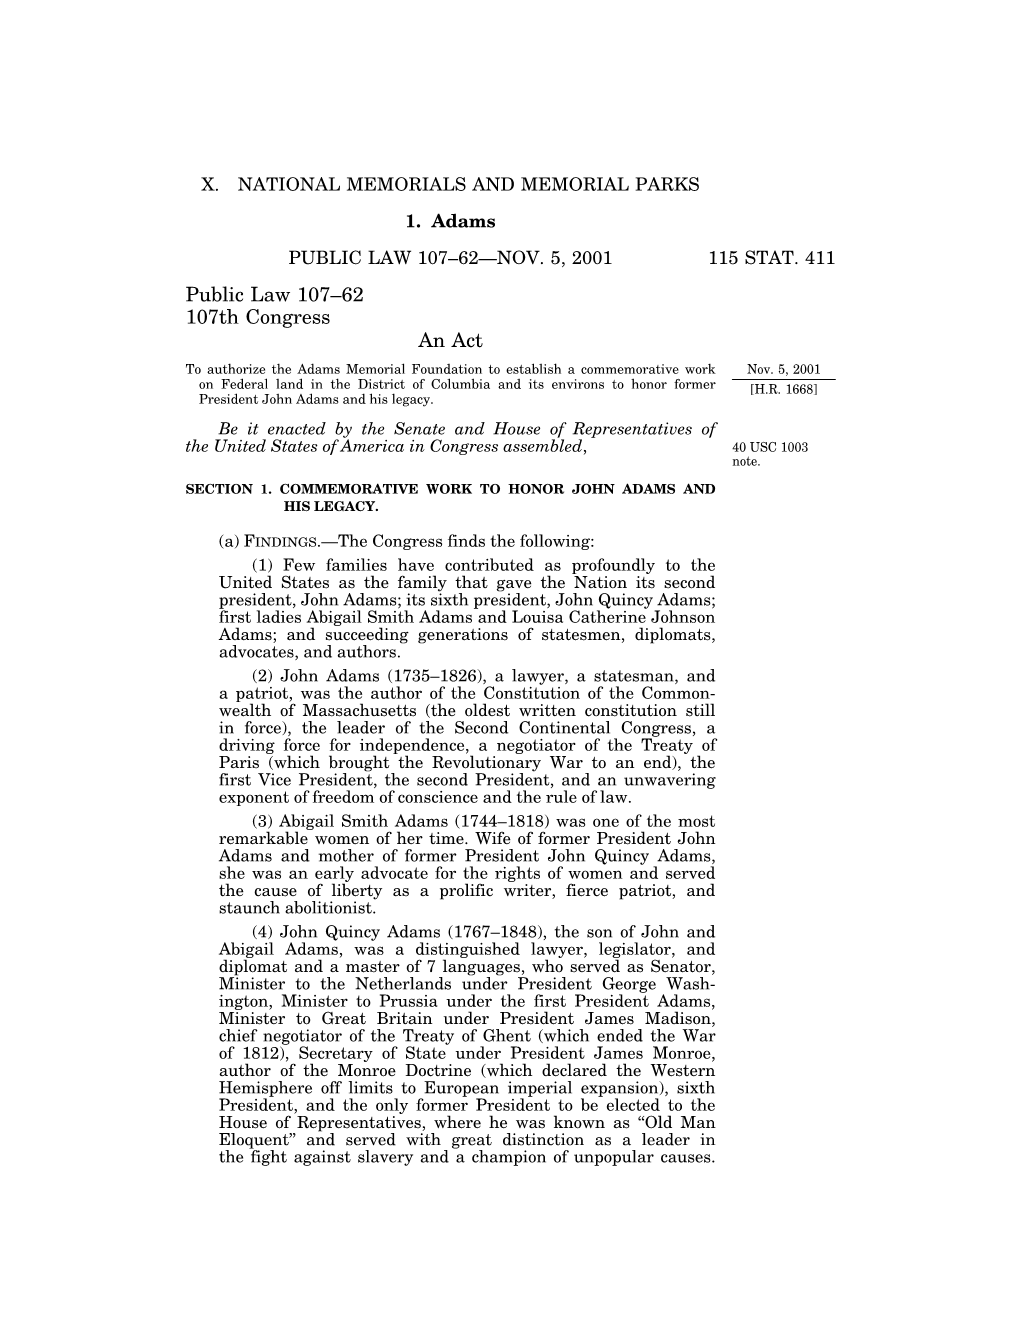 Public Law 107–62 107Th Congress an Act to Authorize the Adams Memorial Foundation to Establish a Commemorative Work Nov